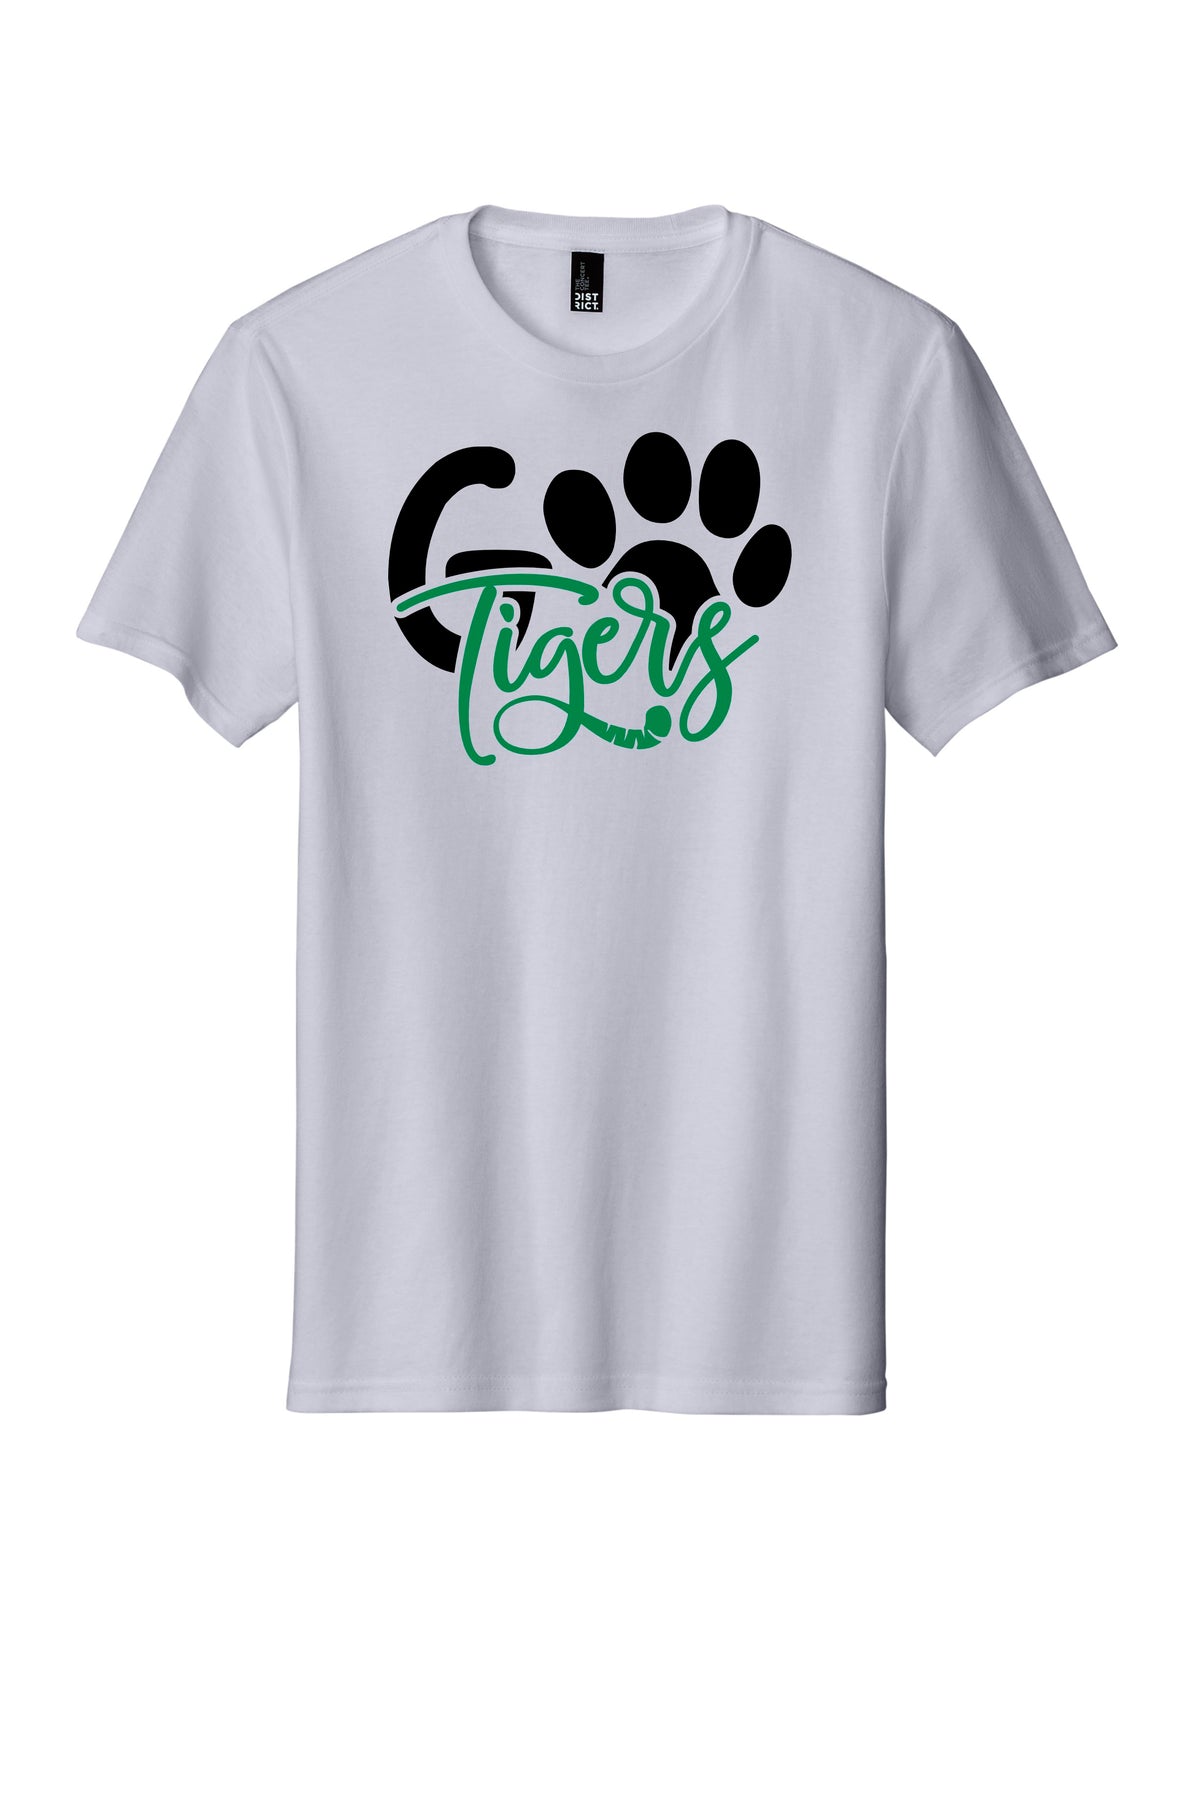 Go Tigers Shirt